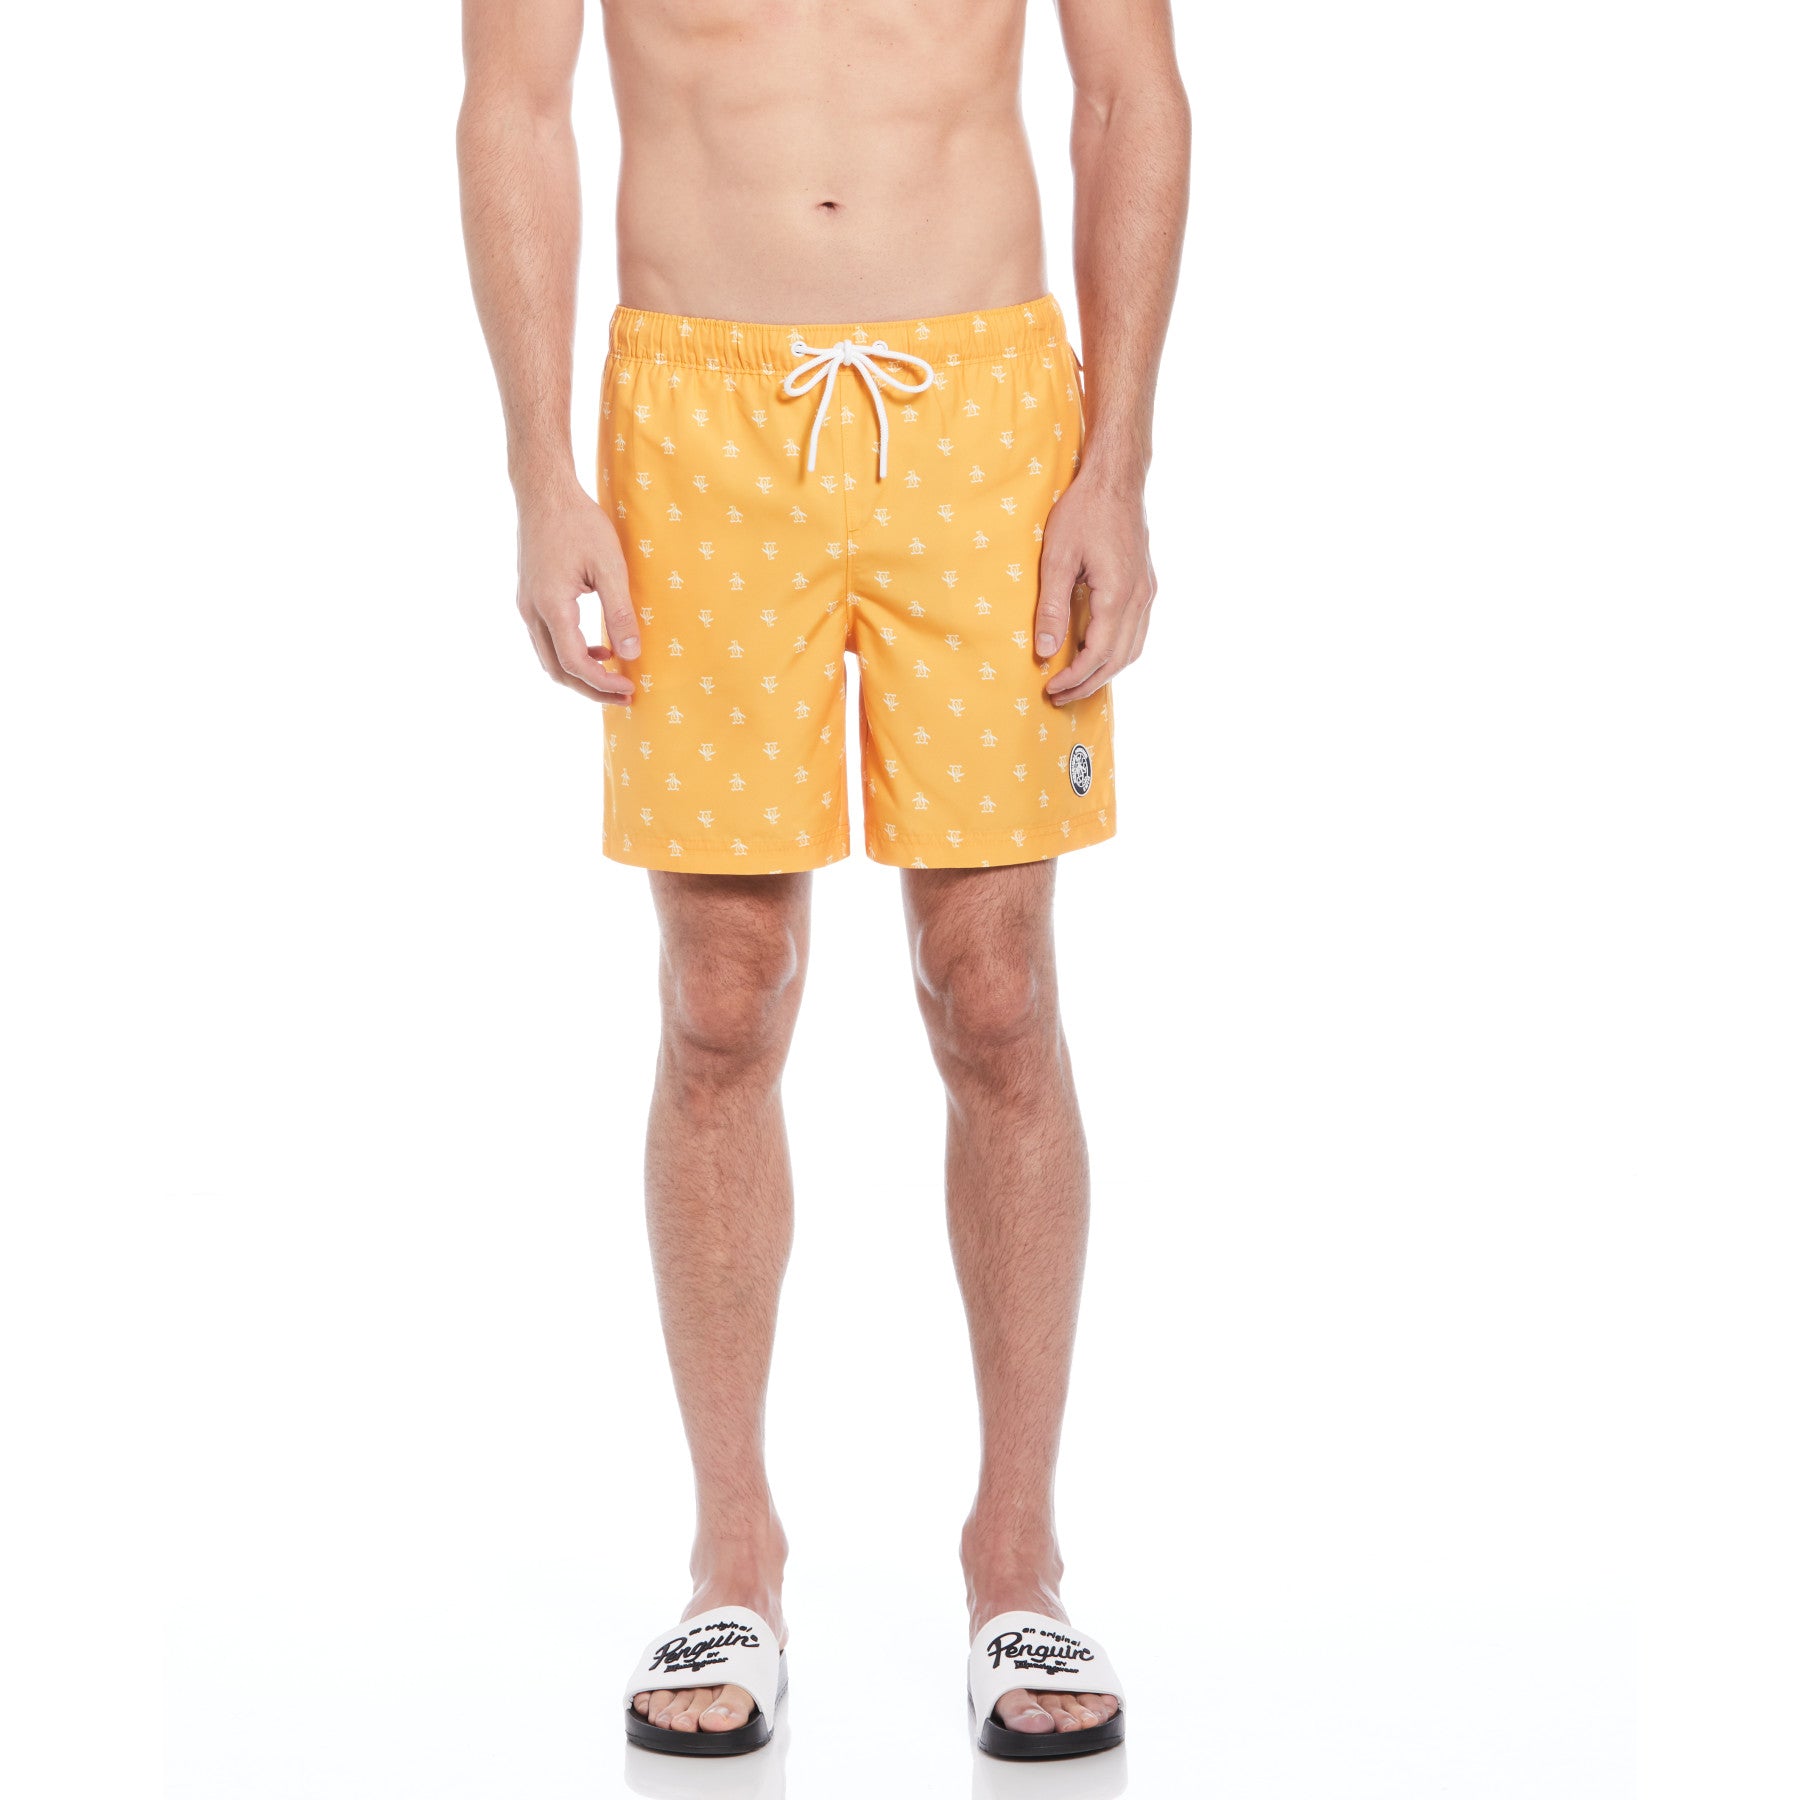 View Original Penguin Repete Print Swim Shorts In Butterscotch Yellow Mens information